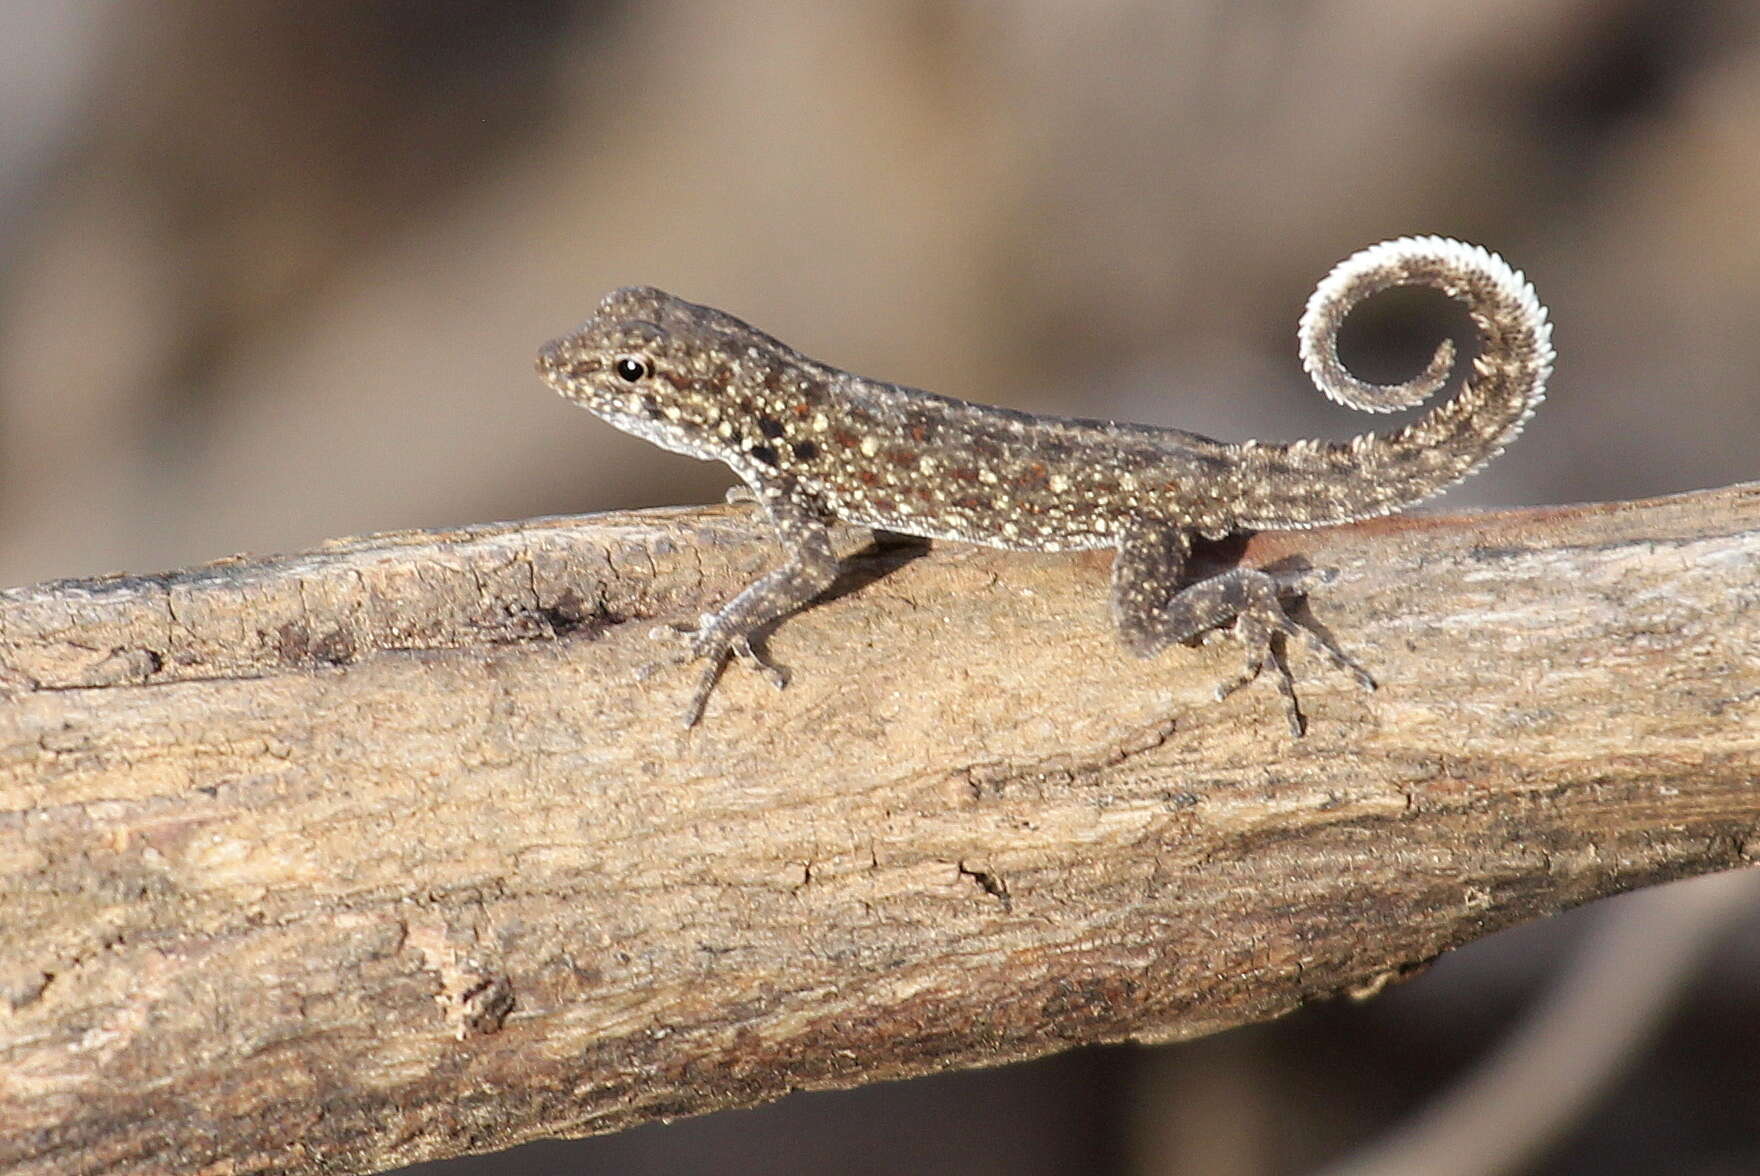 Image of Blandford's Semaphore Gecko